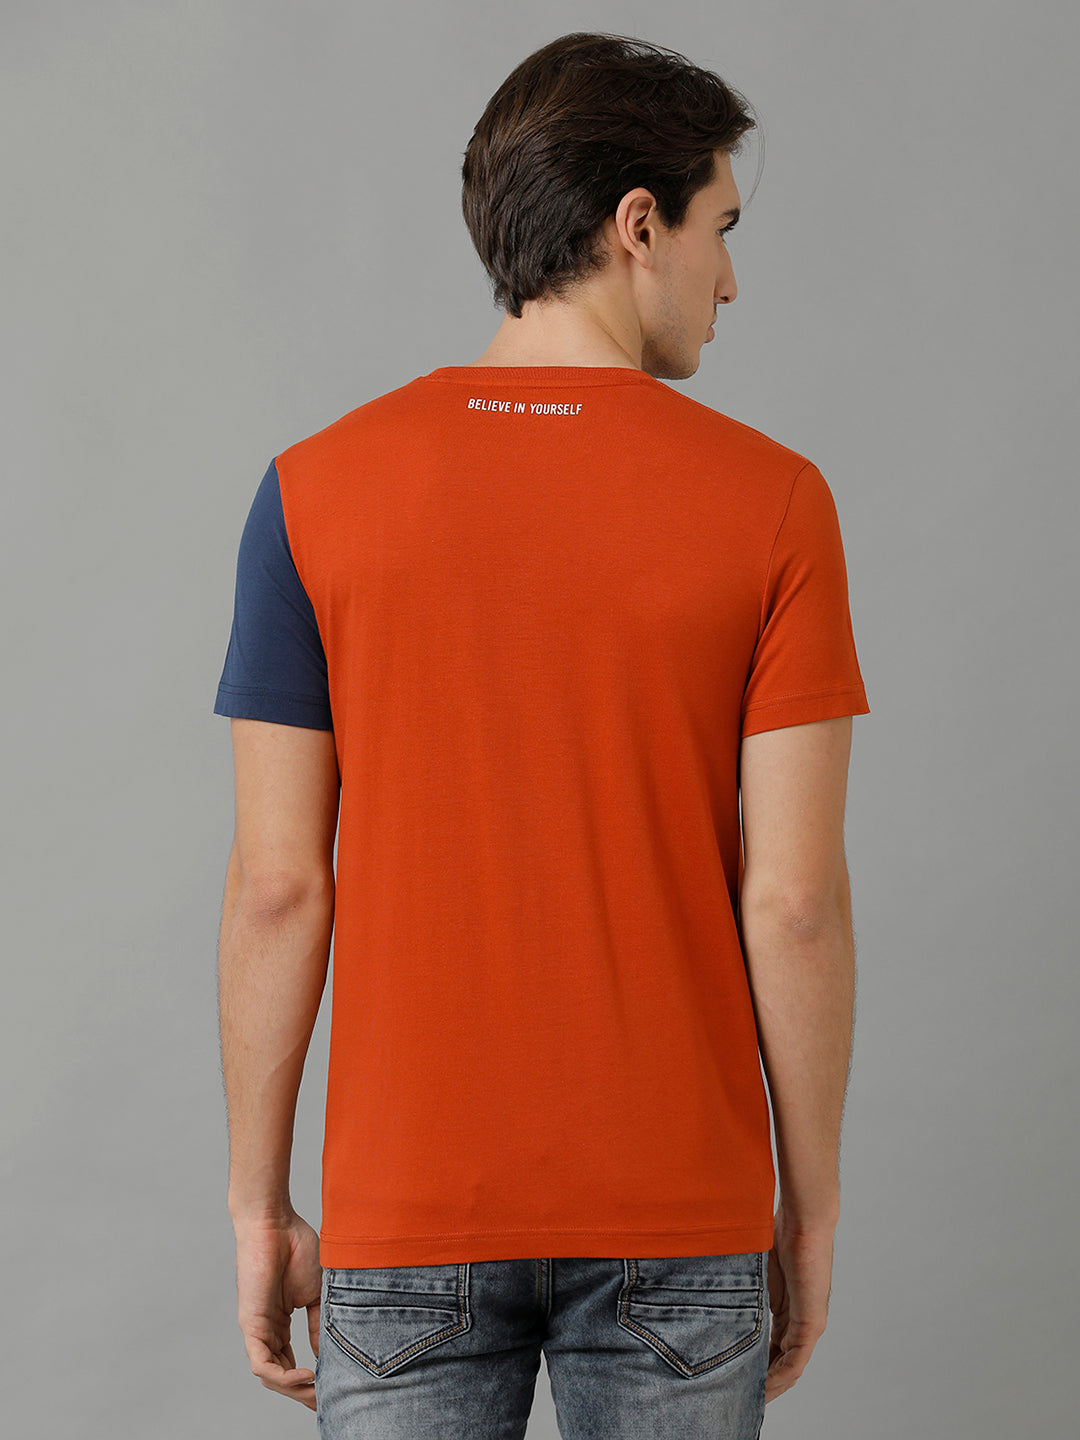 CP BRO Men's Cotton Color Block Half Sleeve Slim Fit Round Neck Multicolor T-Shirt | Brcn - 515 A